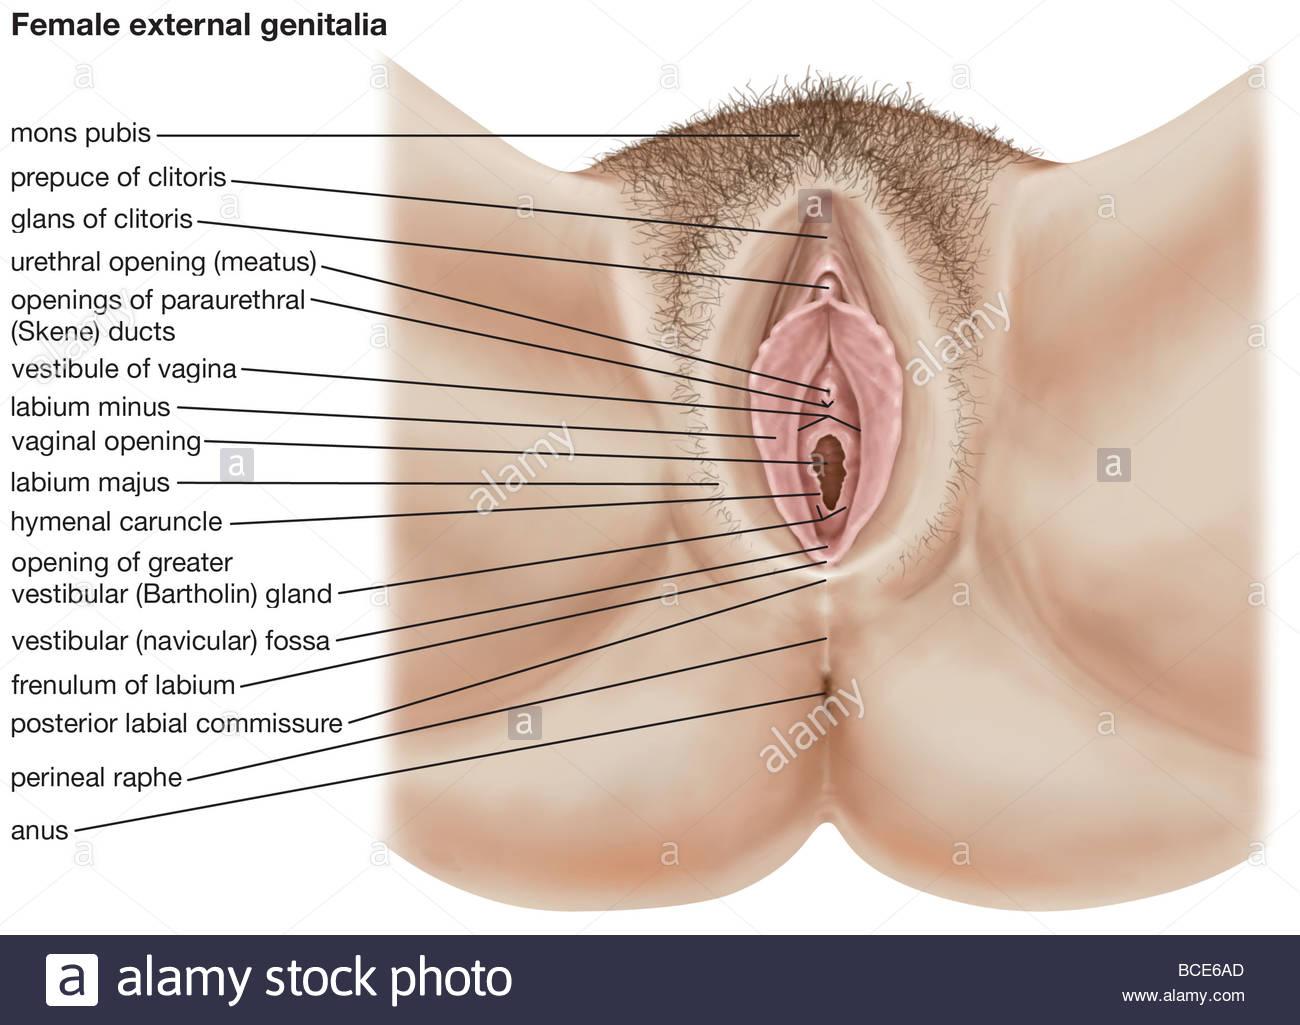 Human female anus